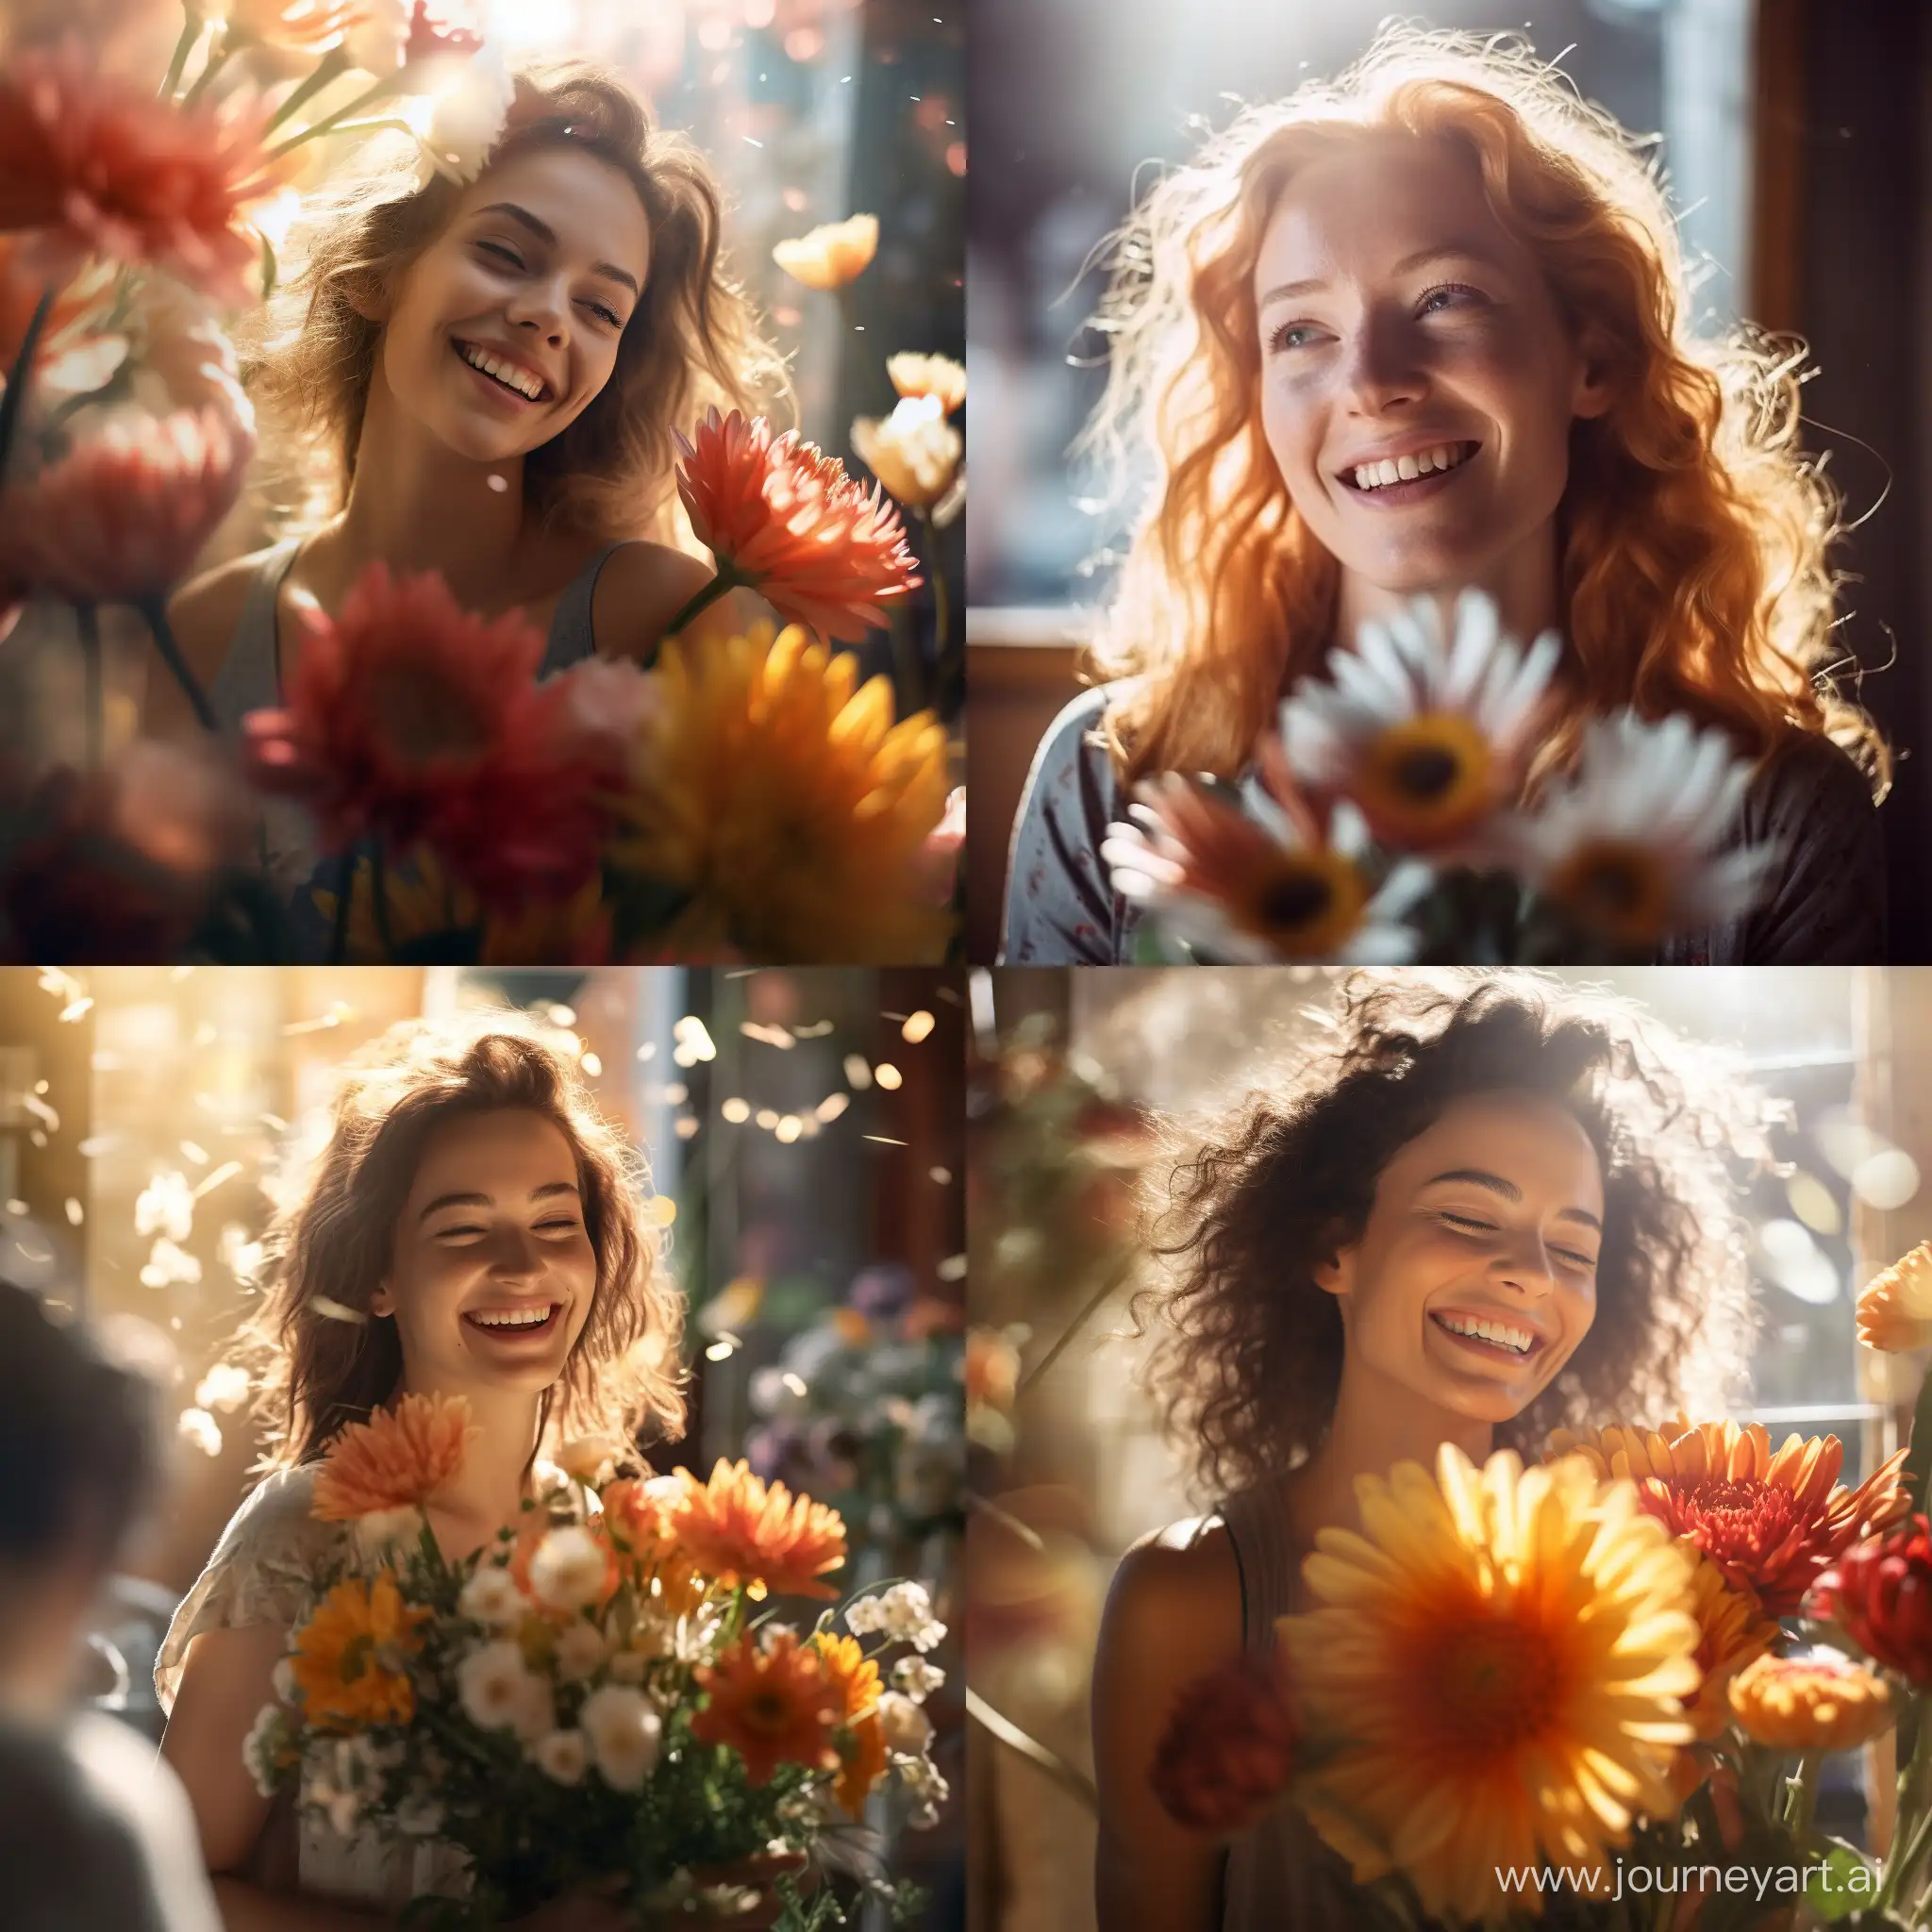 Joyful-Woman-Receives-Sunlit-Bouquet-in-Heartwarming-Surprise-Moment